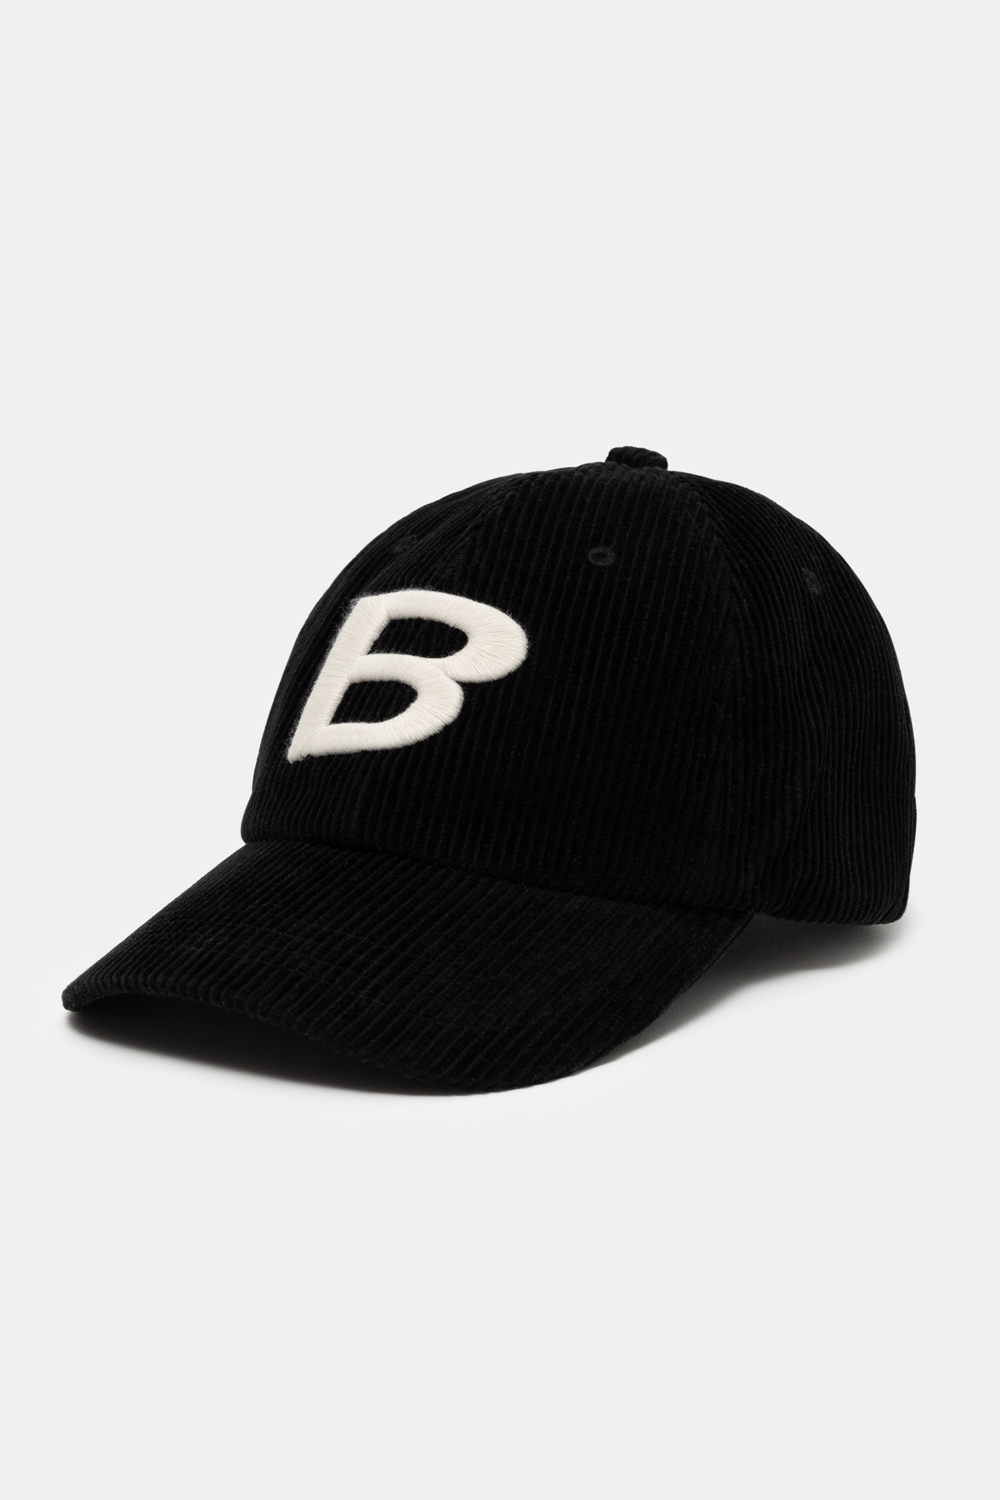 CORDUROY BALL CAP - BLACK